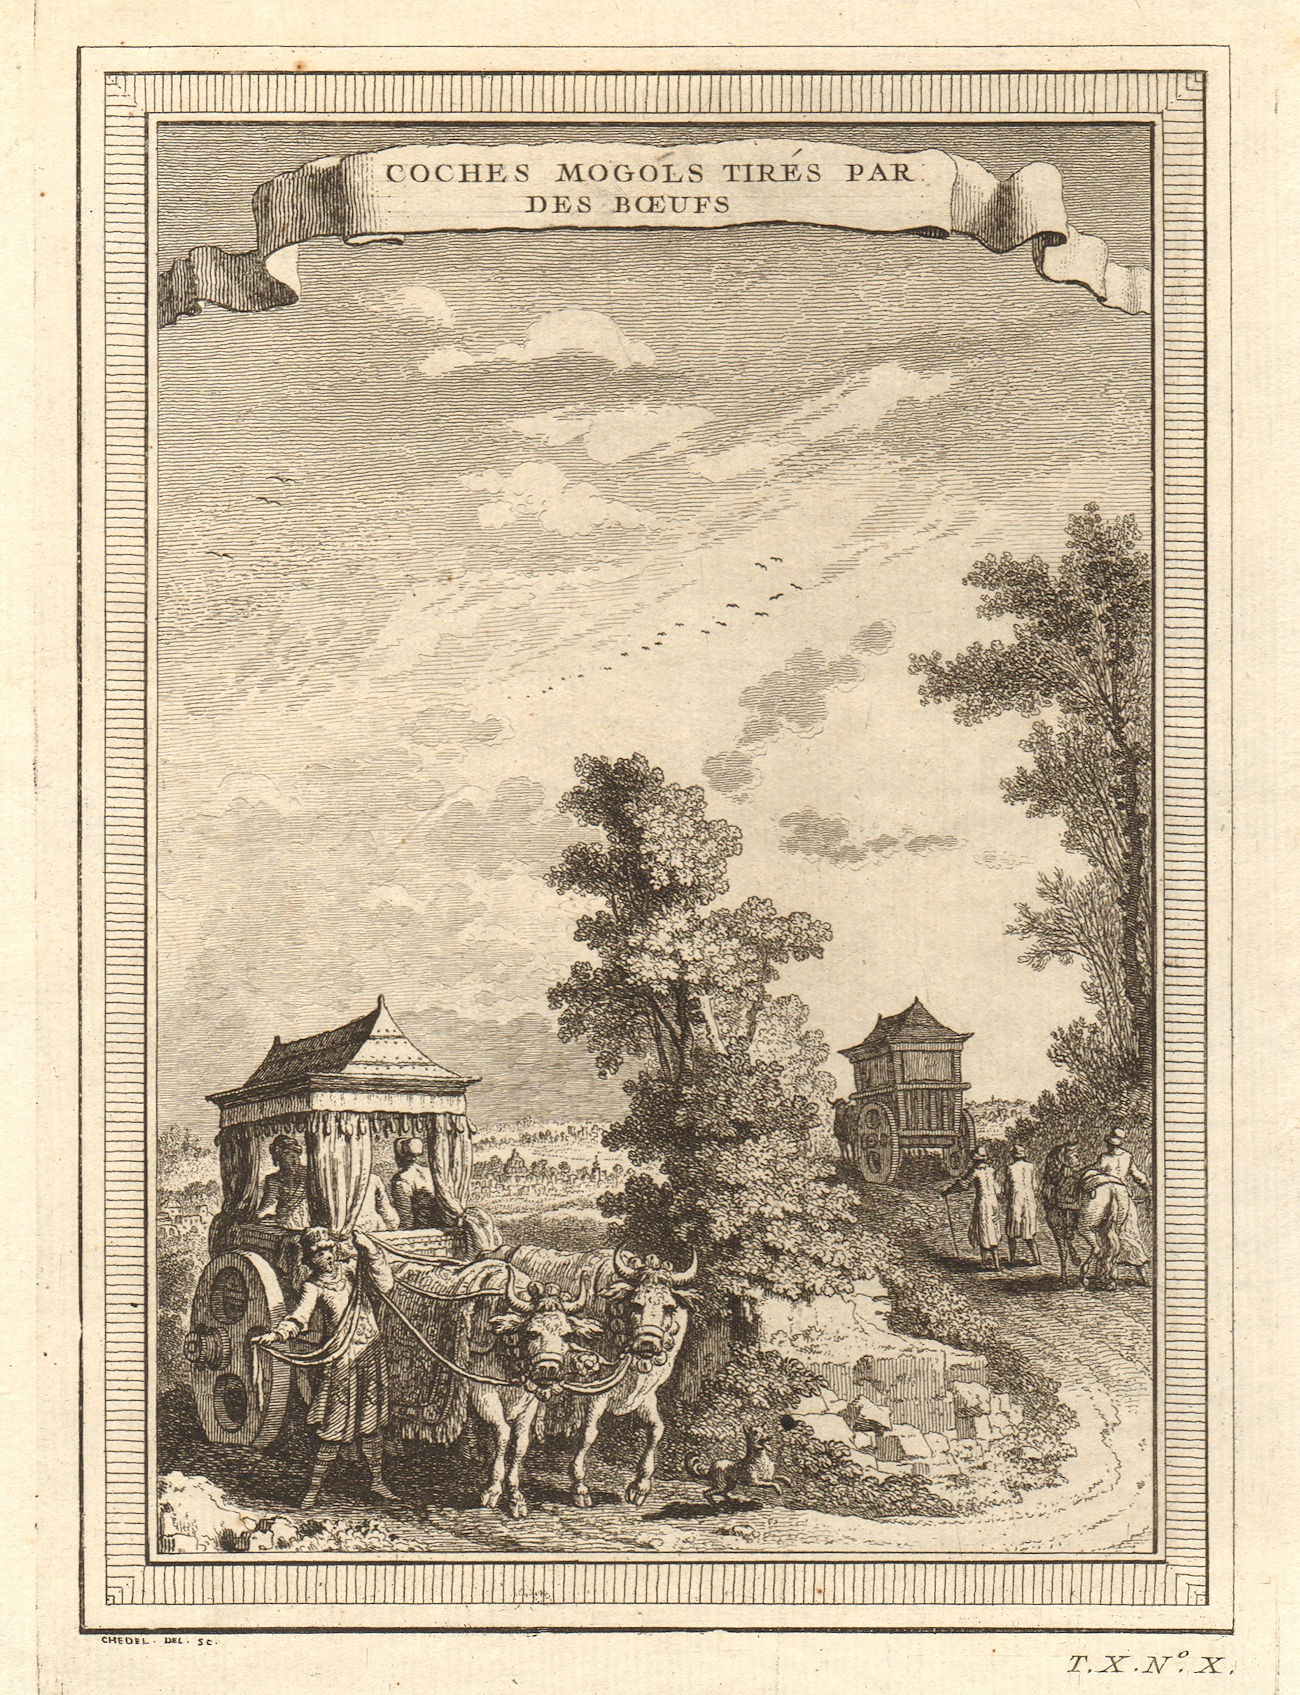 Associate Product 'Coches Mogols tirés par des boeufs'. Mughal coach pulled by cattle. India 1752